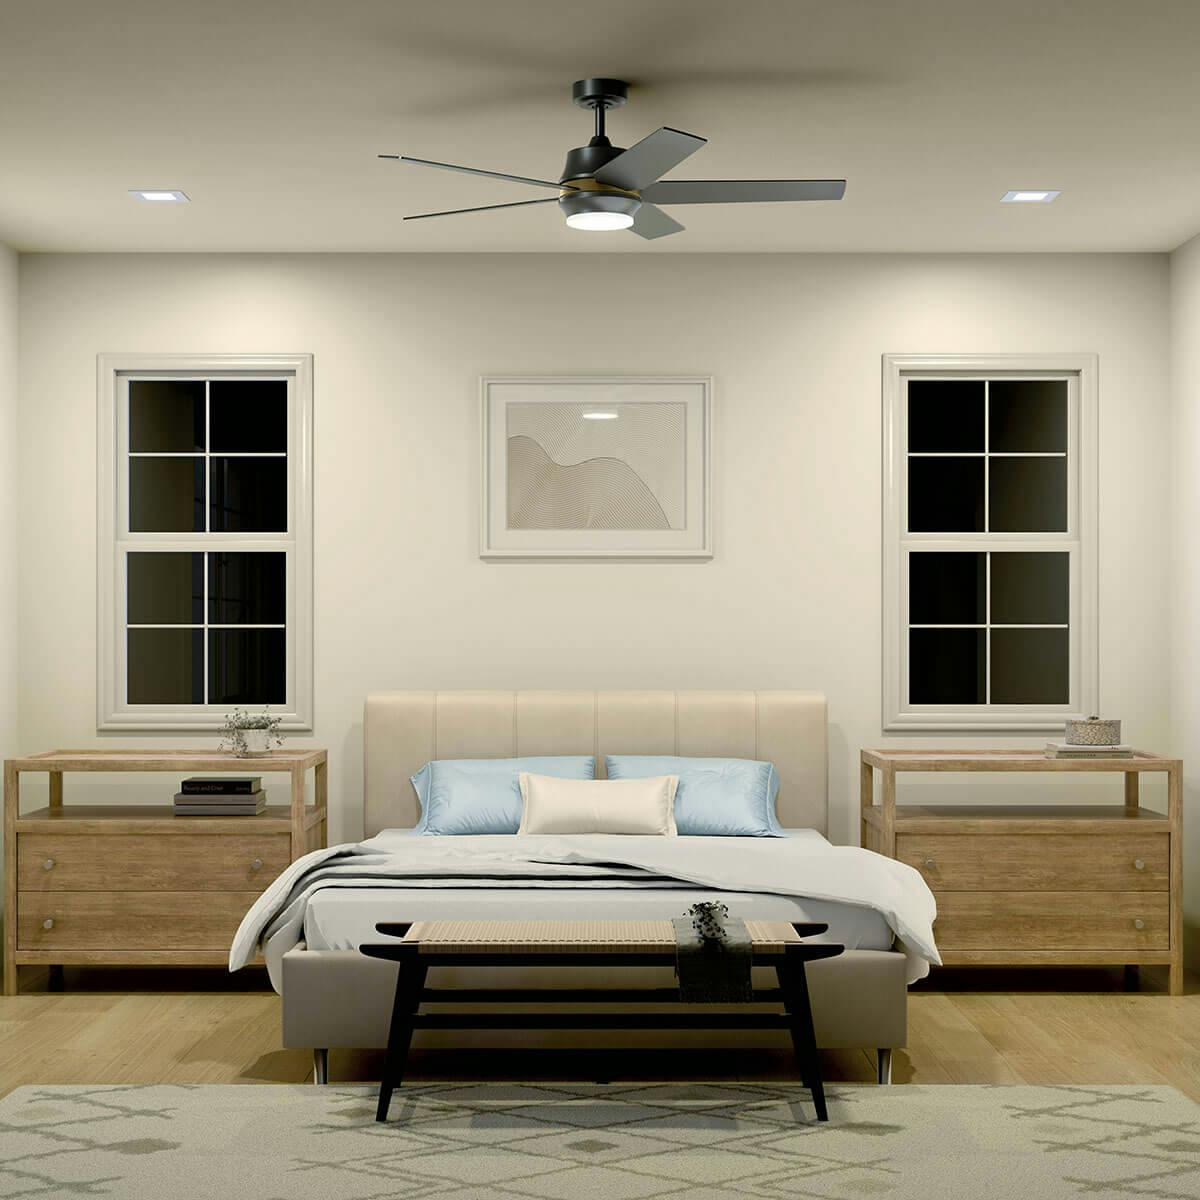 Night time bedroom image featuring Brahm ceiling fan 300059SBK